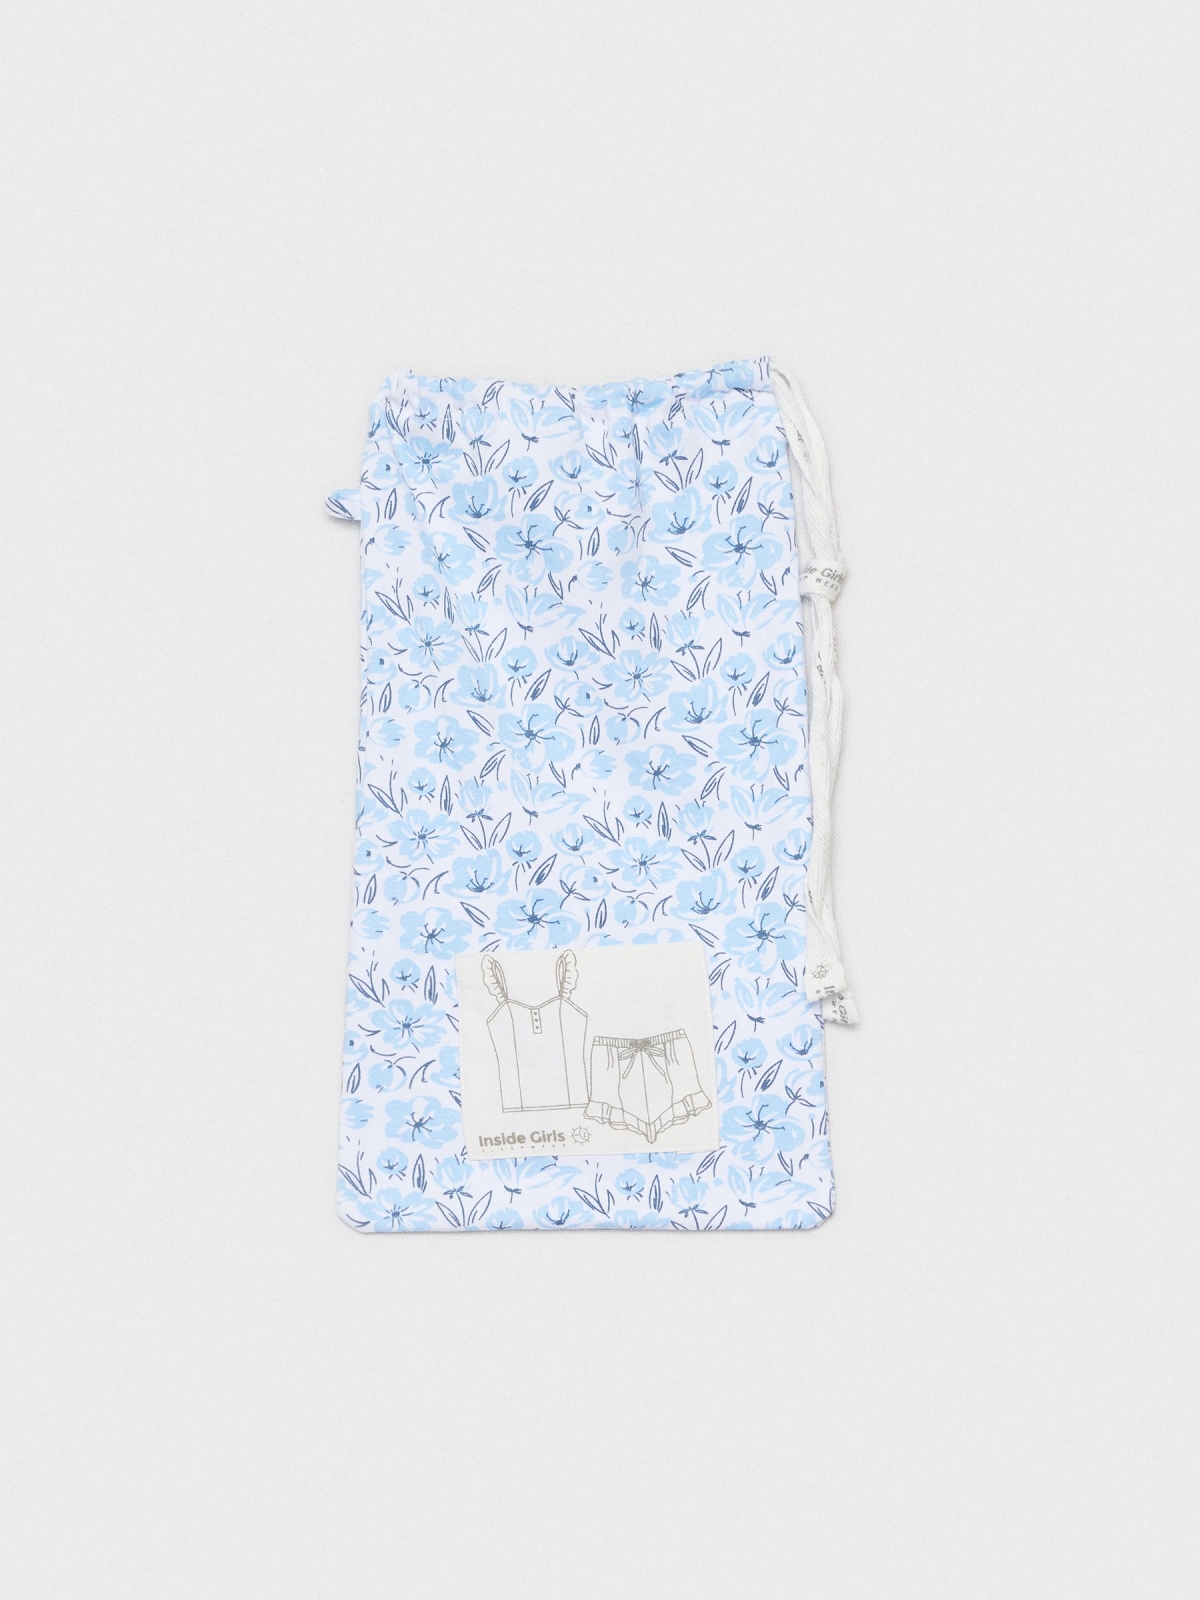 Pijama corto print flores azul/blanco